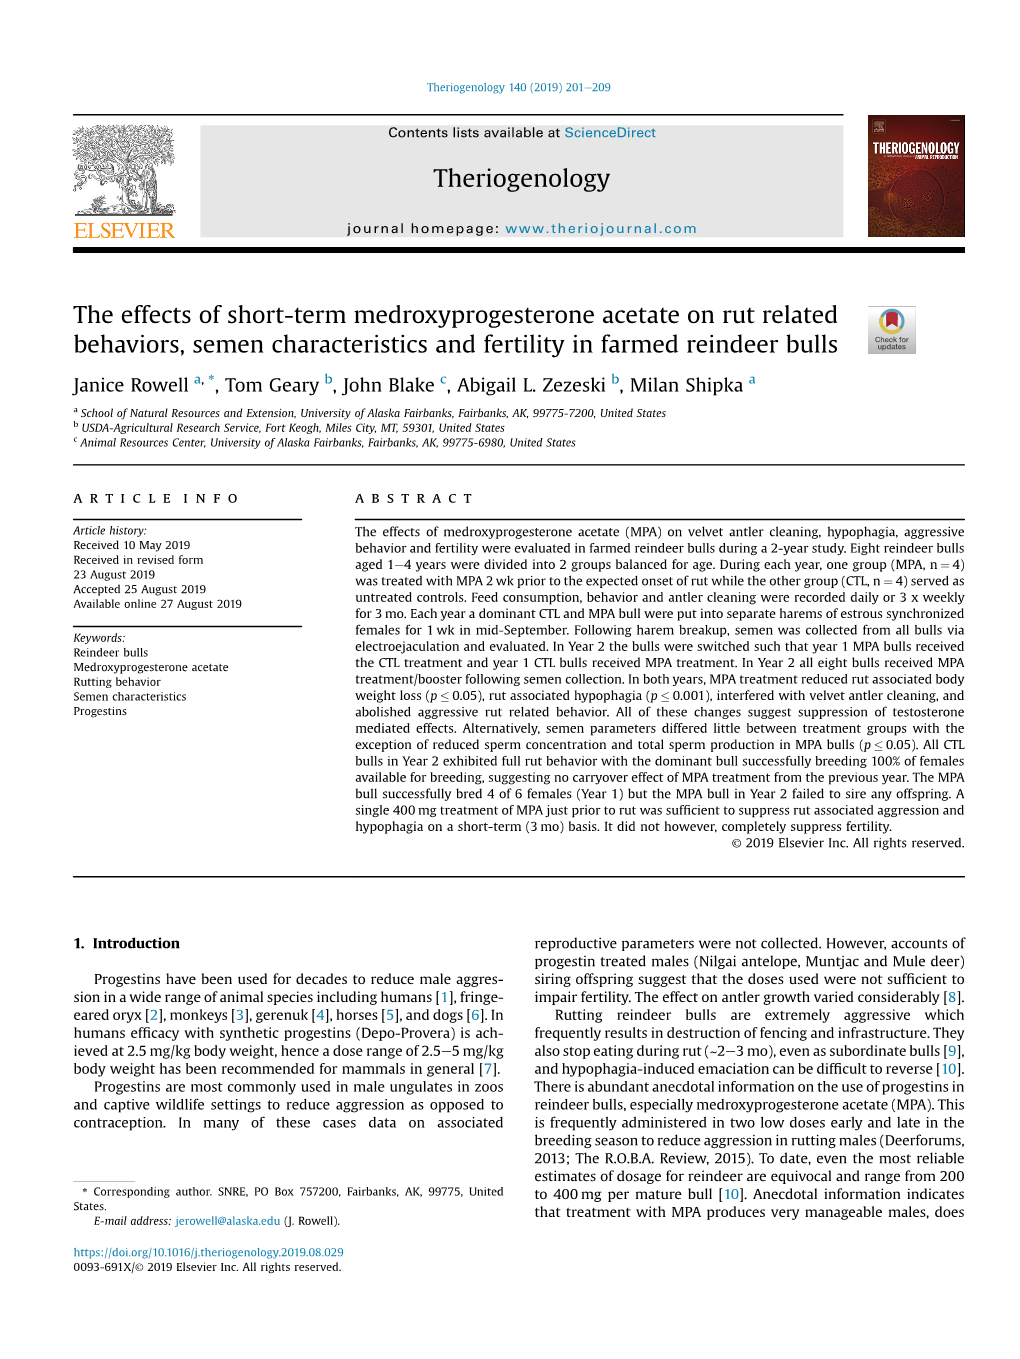 The Effects of Short-Term Medroxyprogesterone Acetate on Rut Related Behaviors, Semen Characteristics and Fertility in Farmed Reindeer Bulls